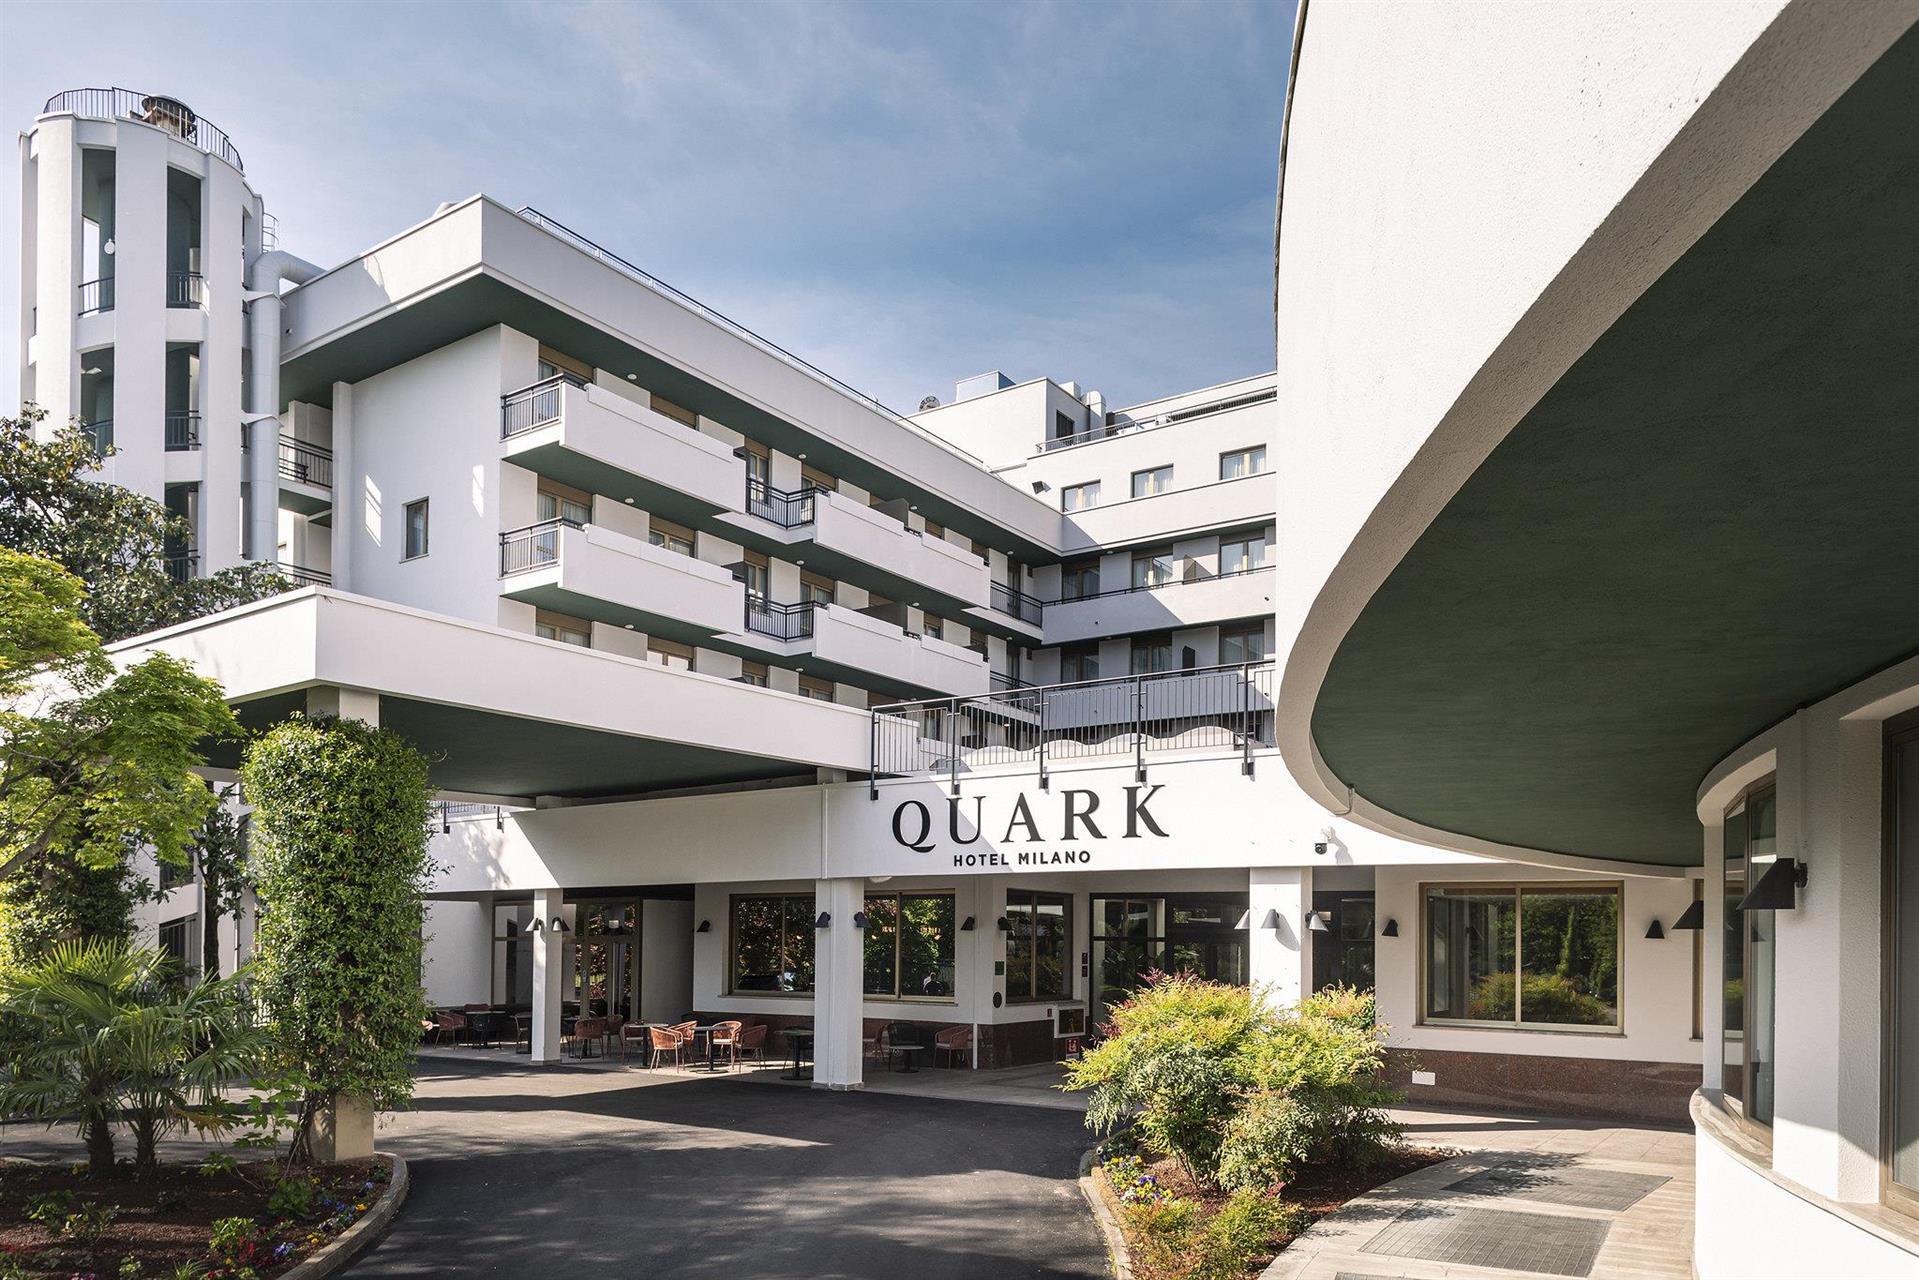 Quark Hotel Milano in Milan, IT